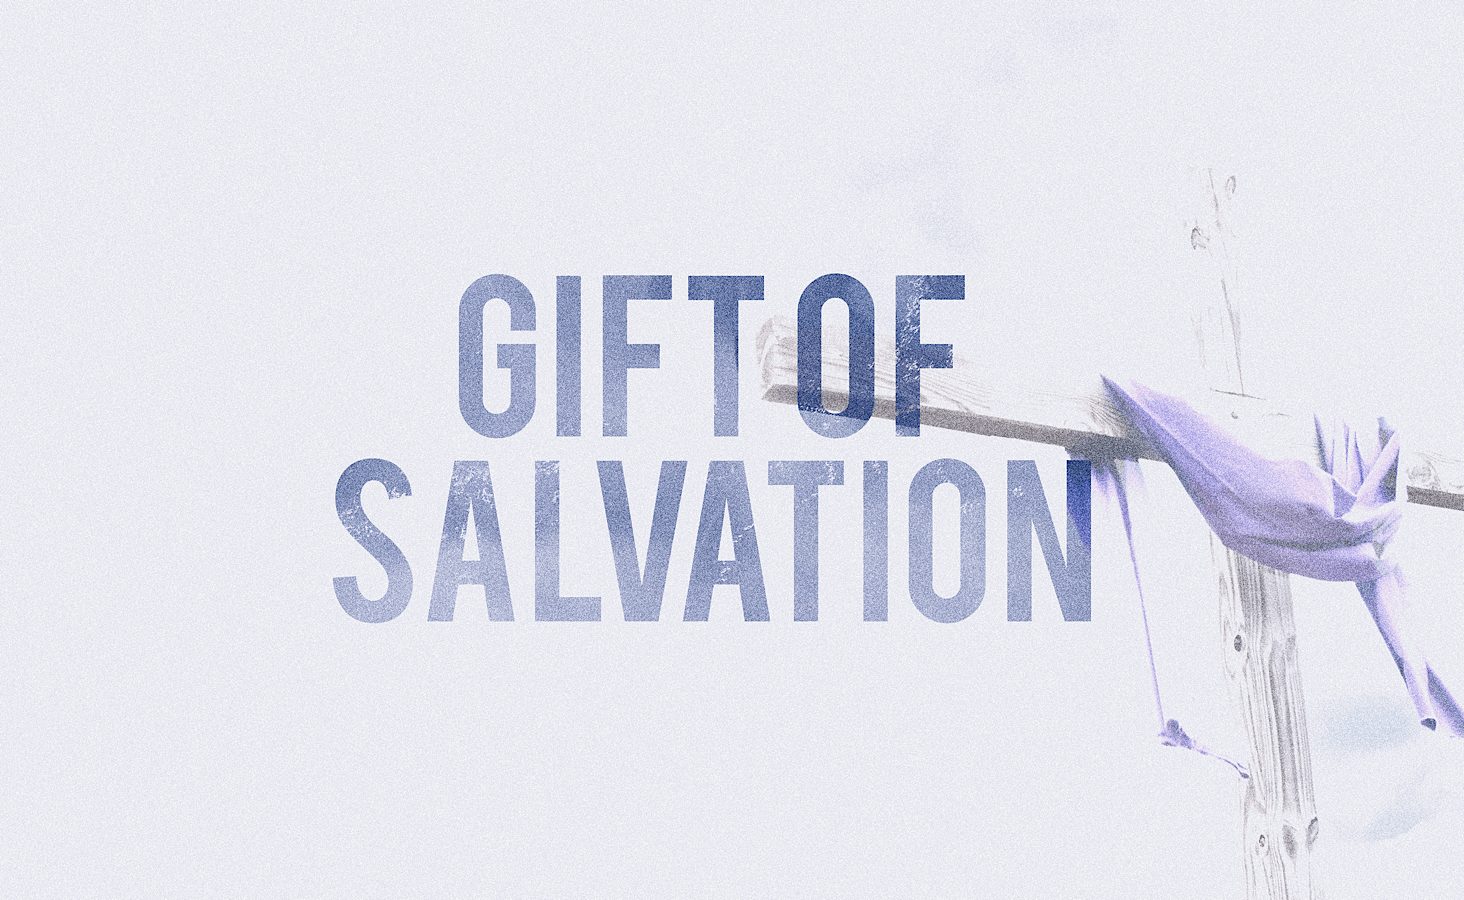 Mini Movie about Salvation